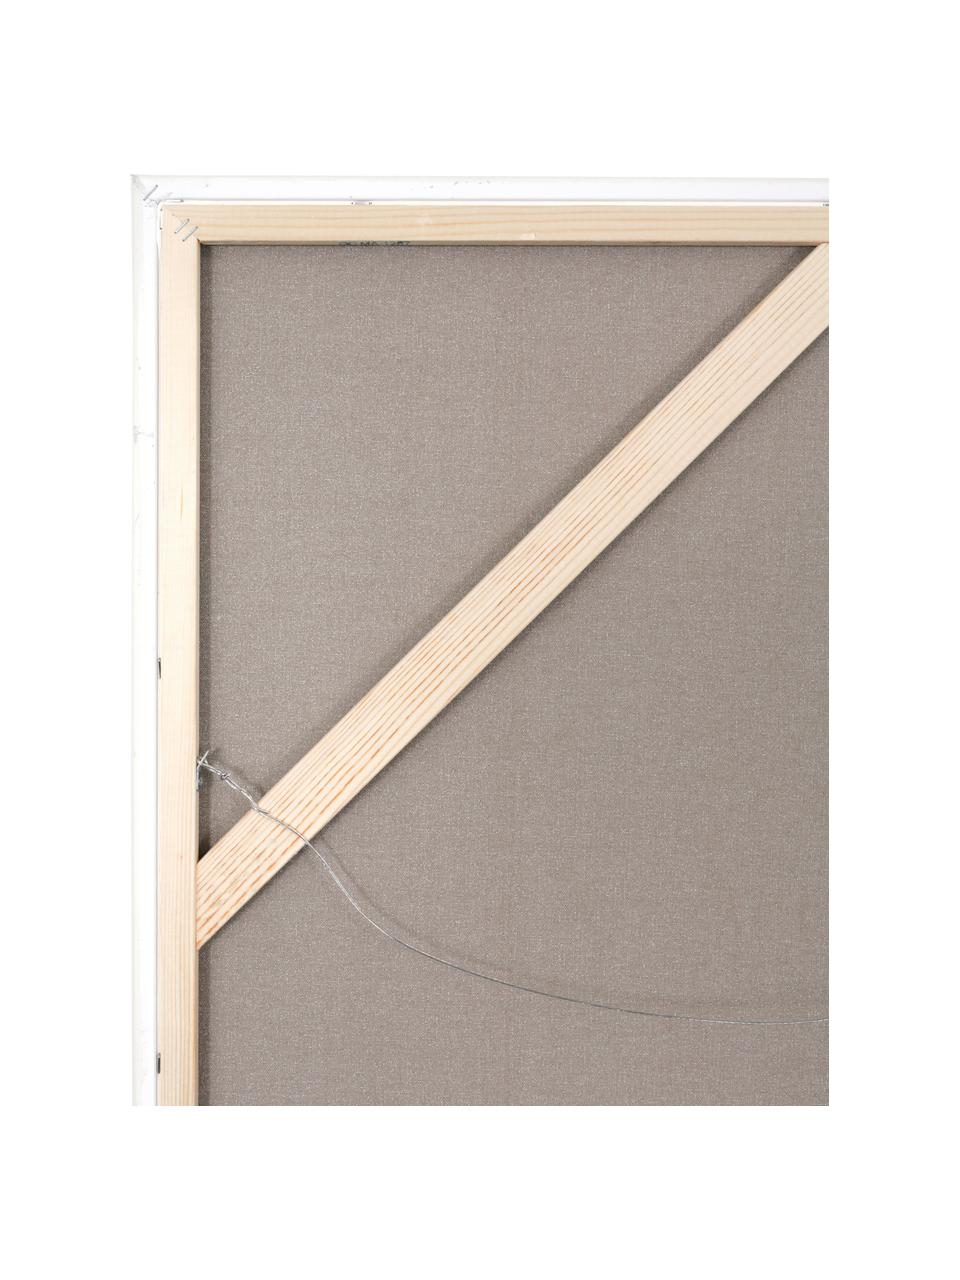 Handgemaltes Leinwandbild Scenario mit Holzrahmen, Rahmen: Eichenholz, Beige, Grau, B 92 x H 120 cm